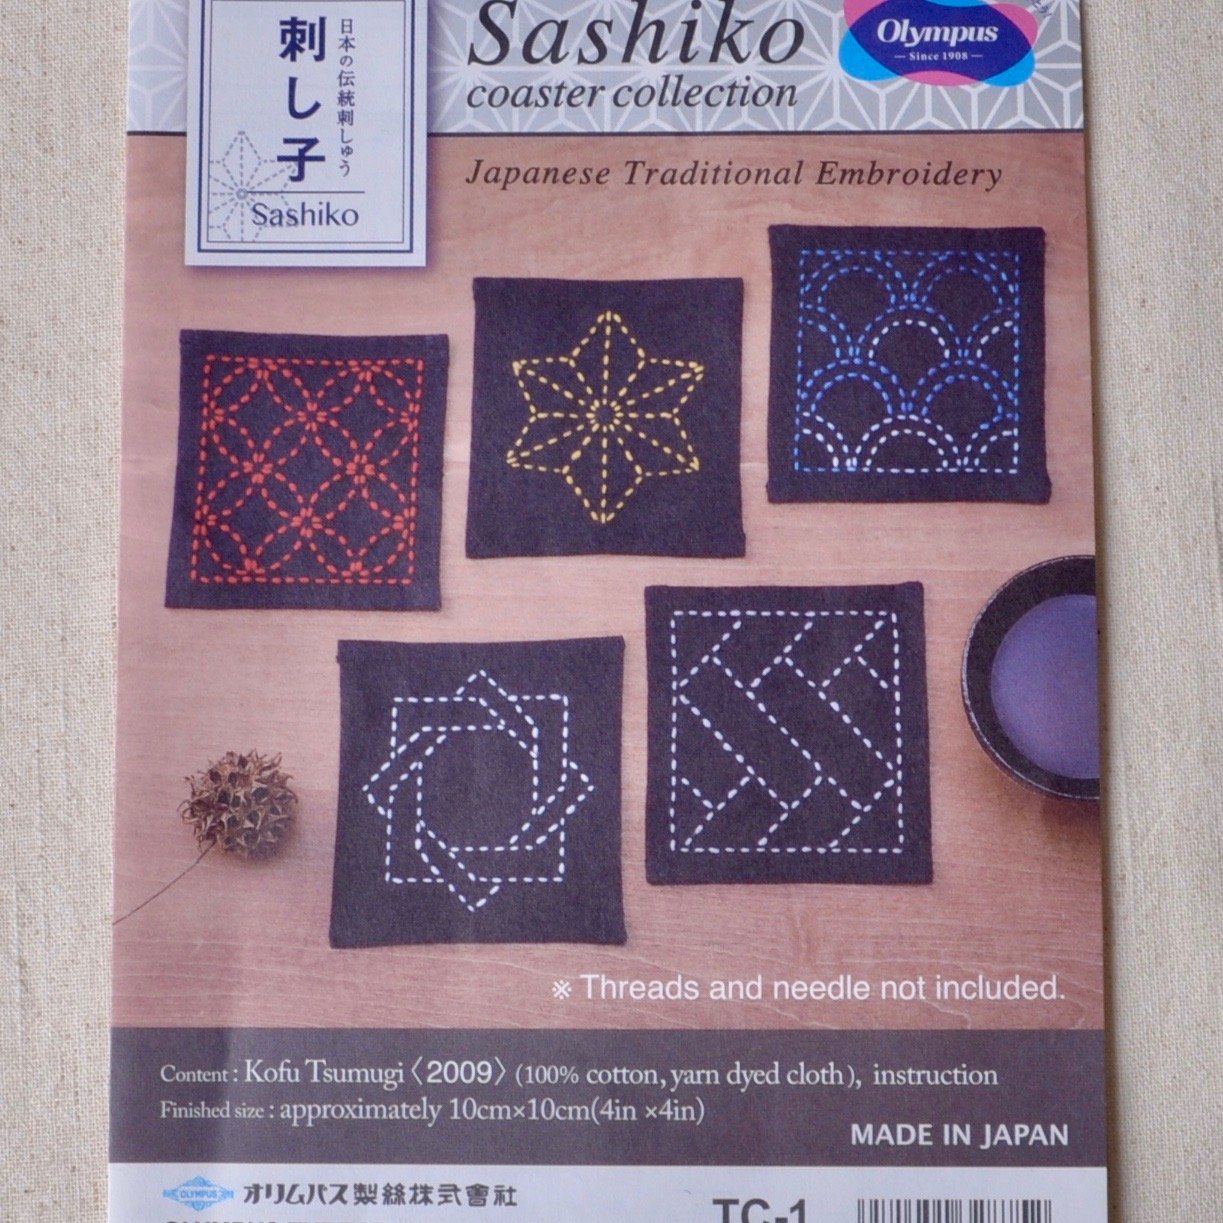 Olympus sashiko kit pre-printed five designs